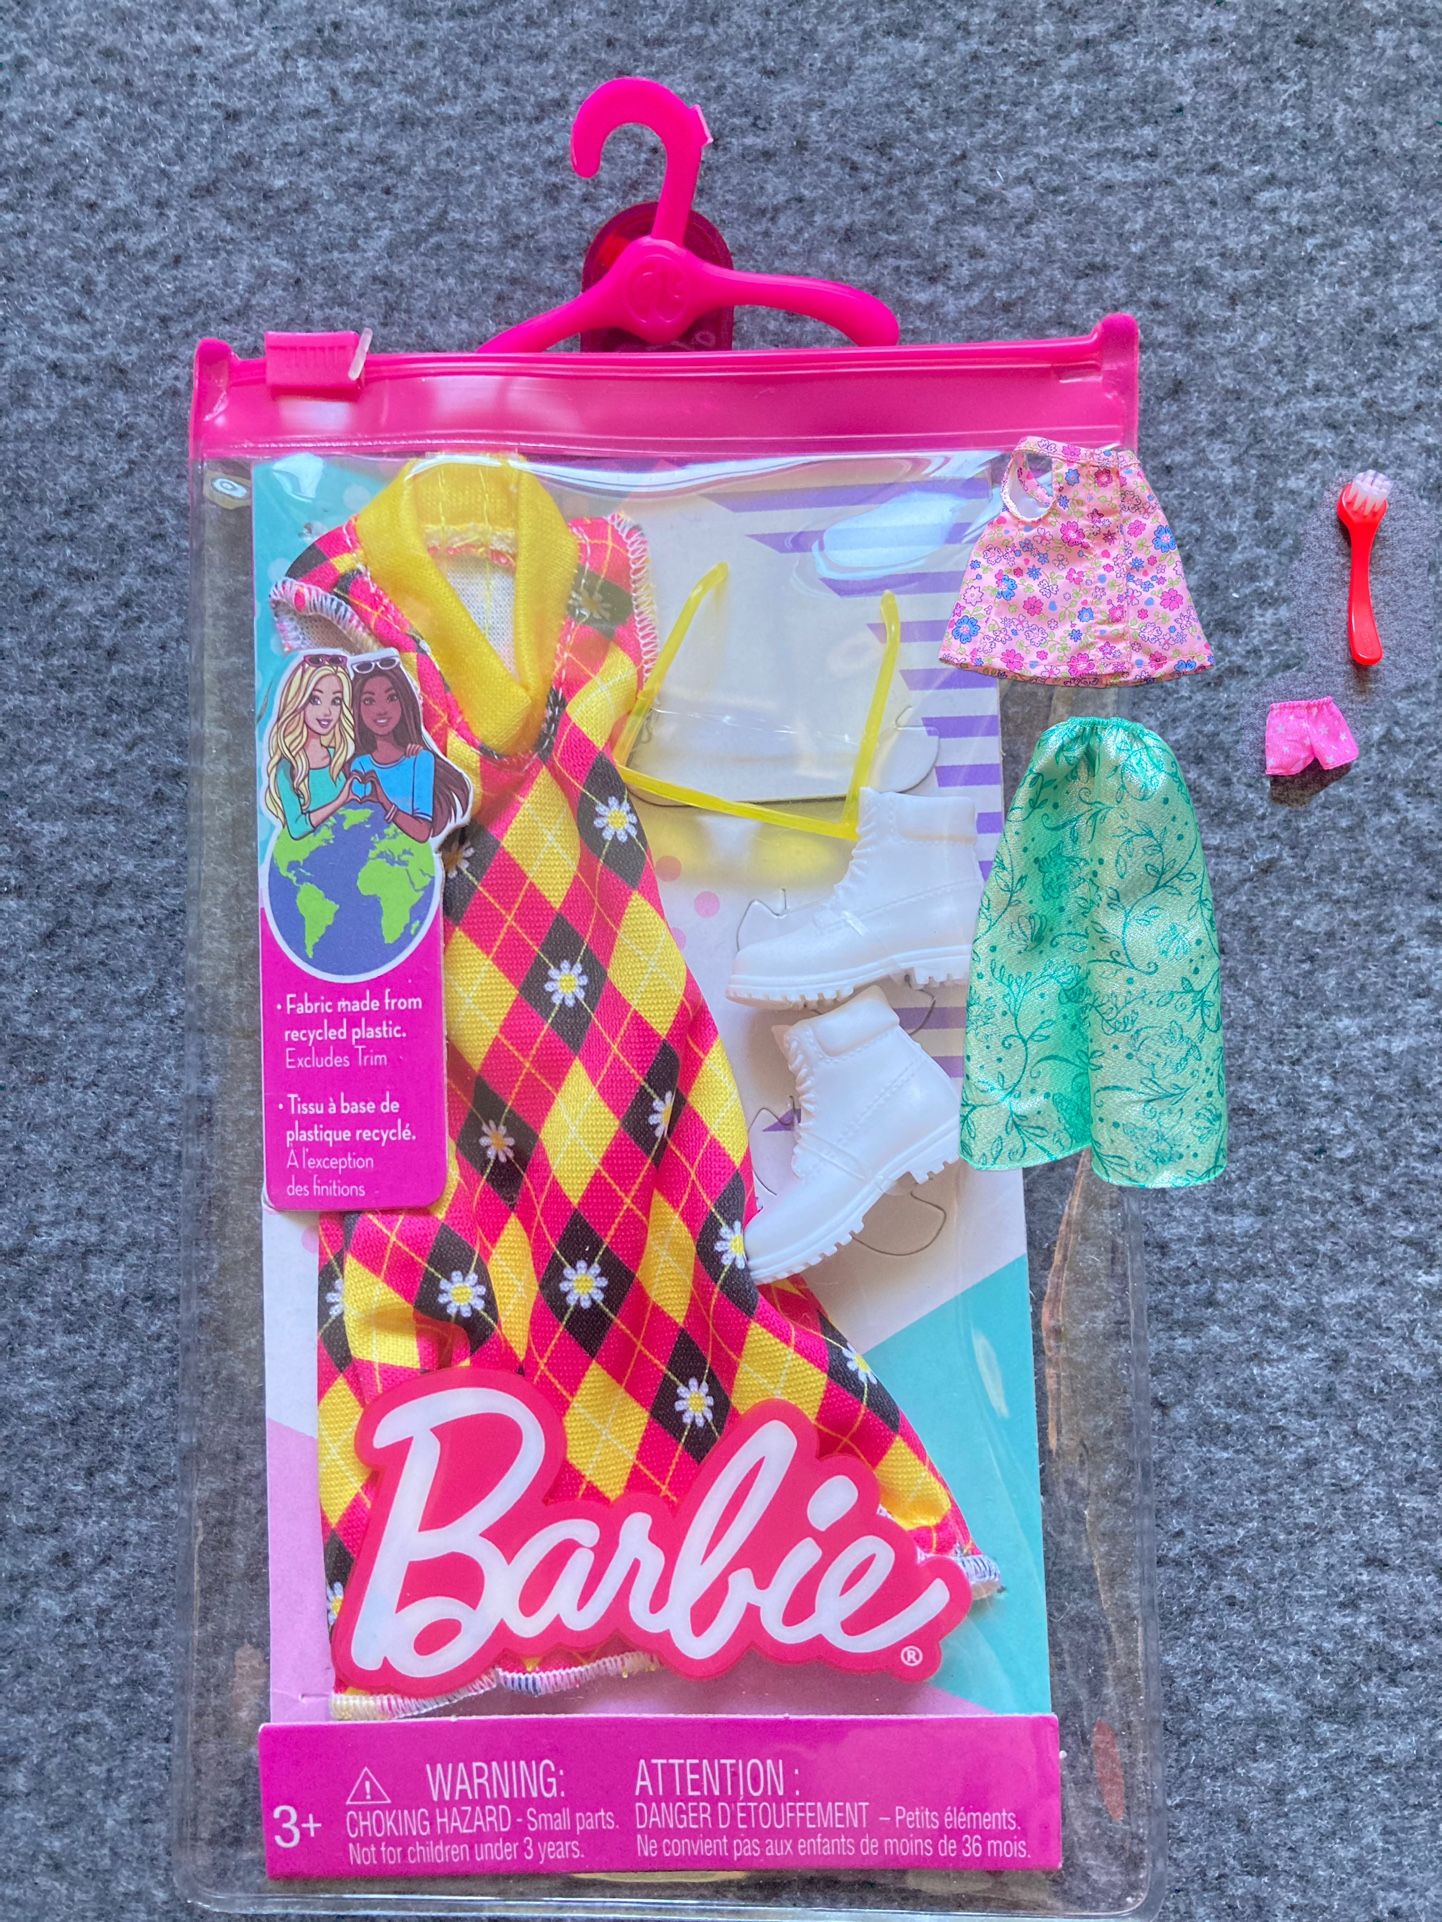 Barbie Fashion Clothes with Argyle Dress Accessories Pack - HJT17